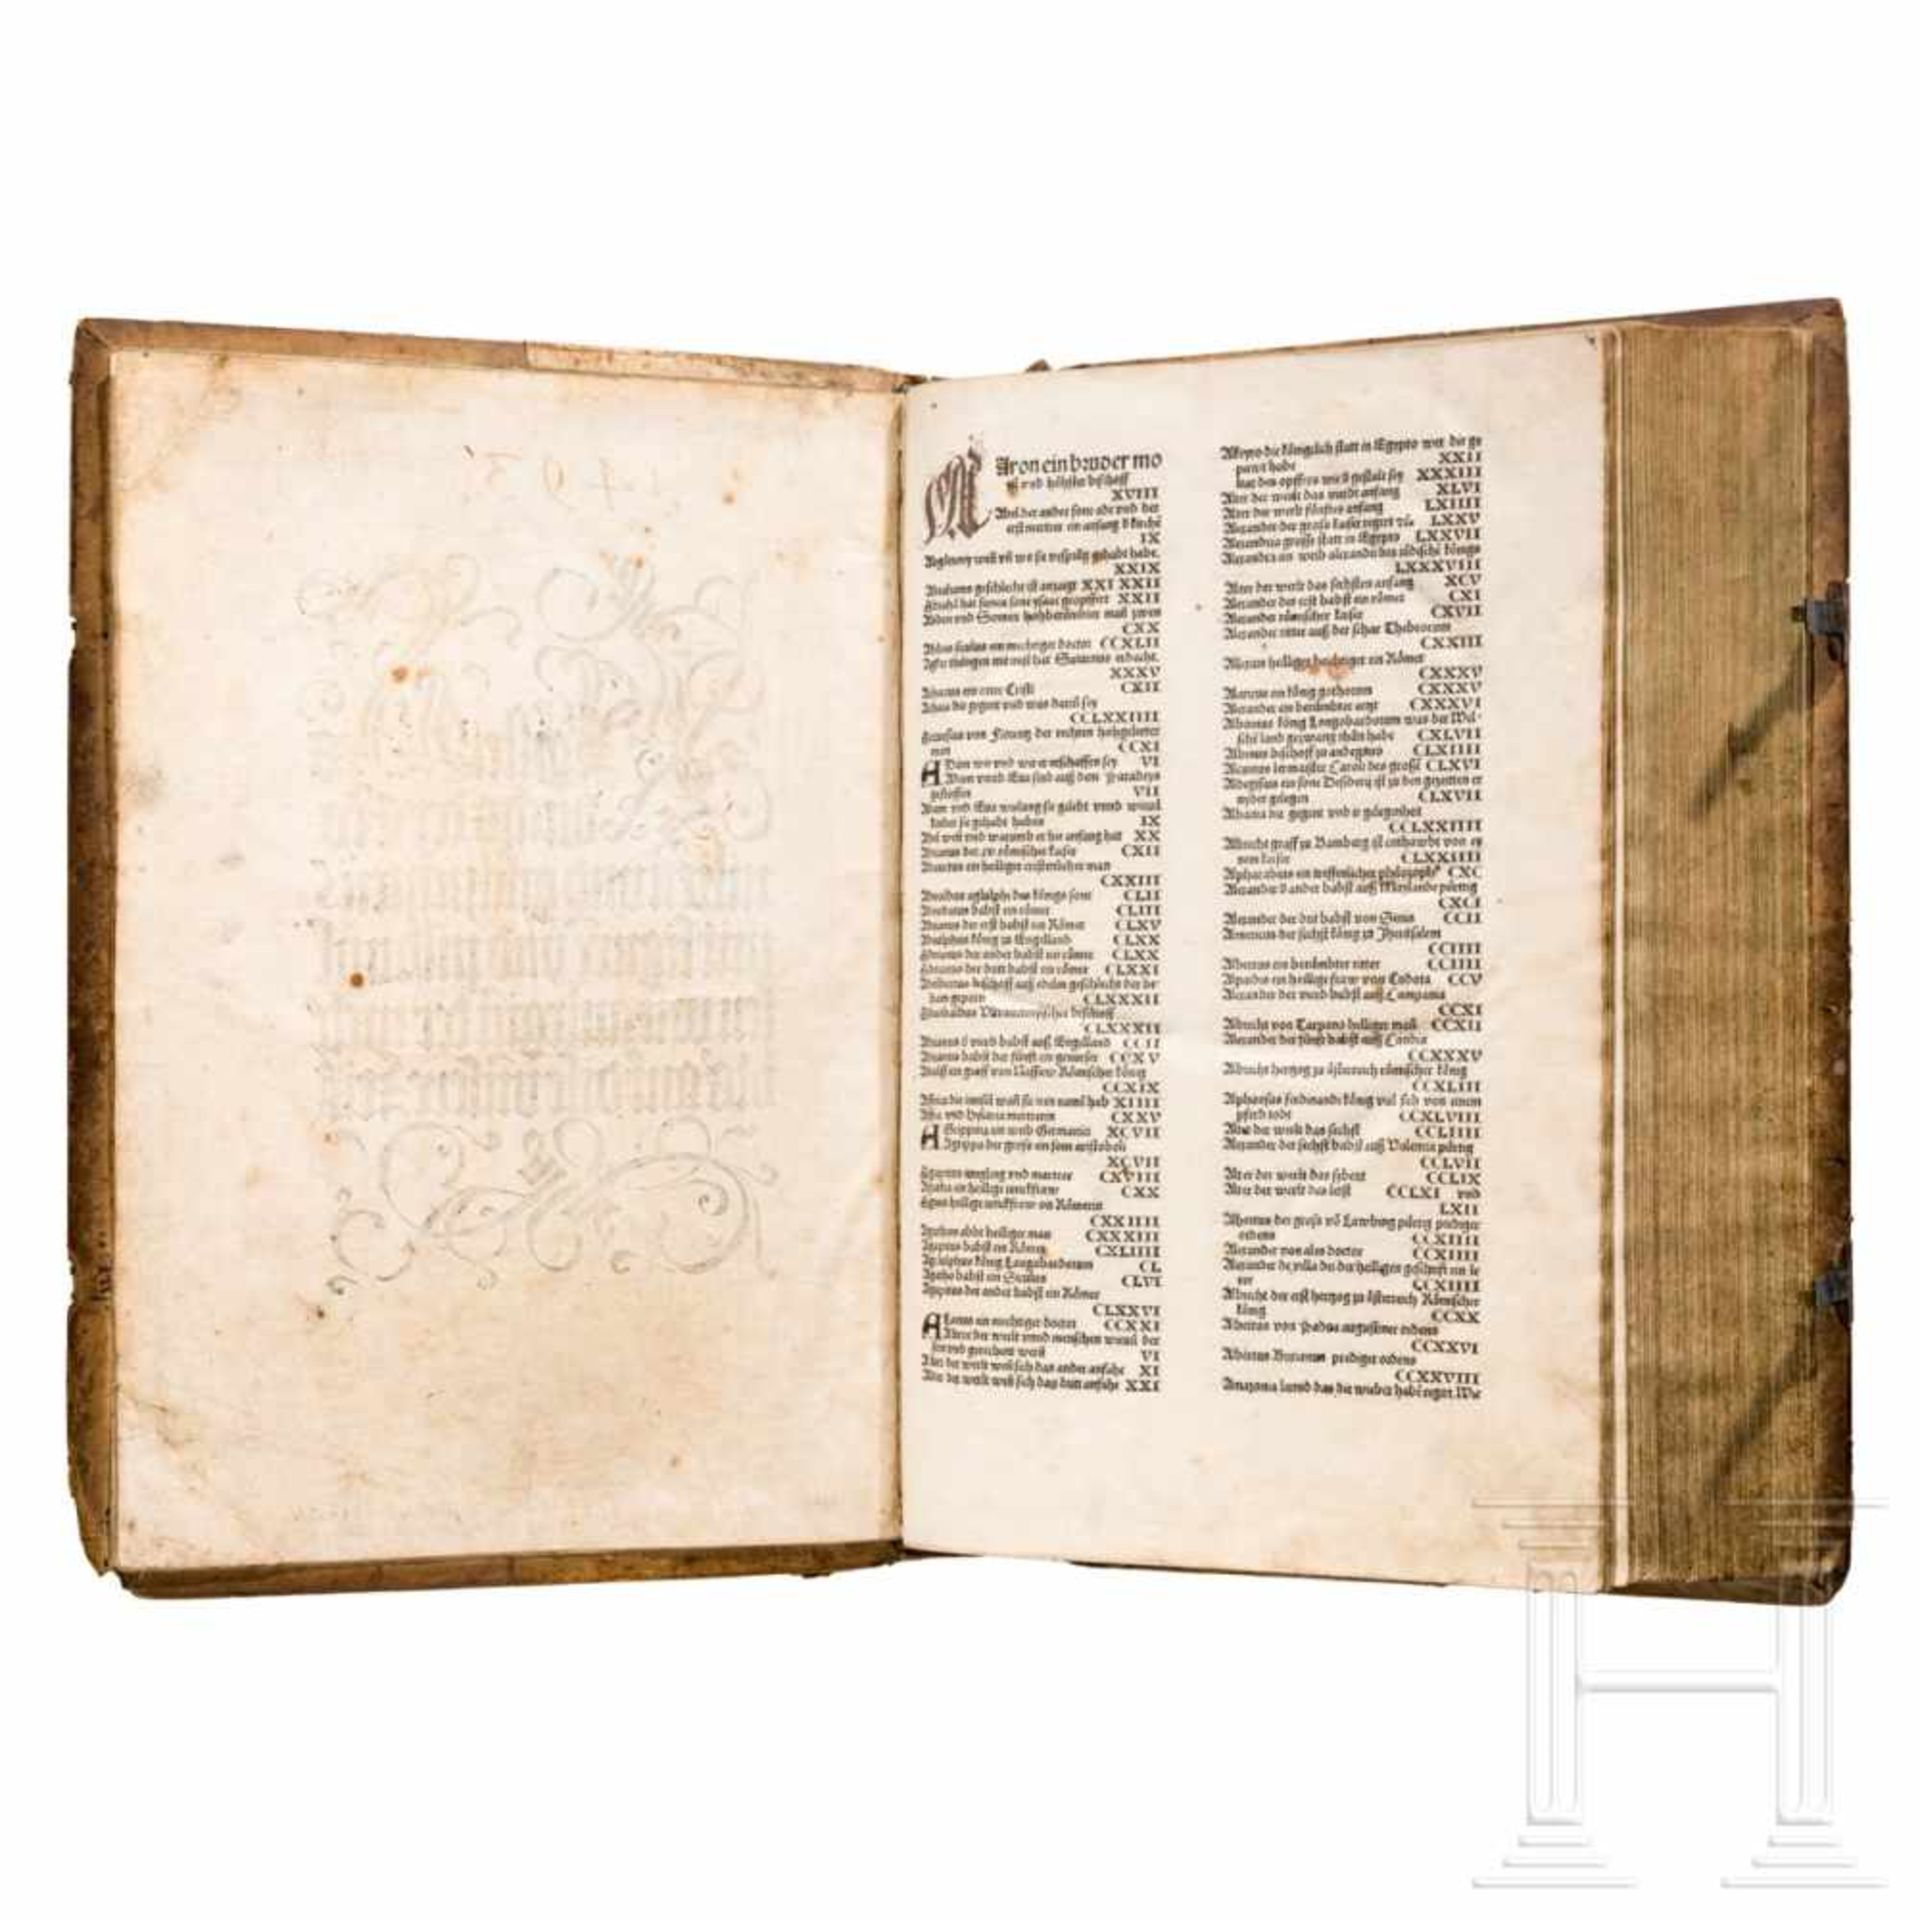 Hartmann Schedel, Das Buch der Chroniken, Nürnberg, A. Koberger, 1493 - Bild 43 aus 51